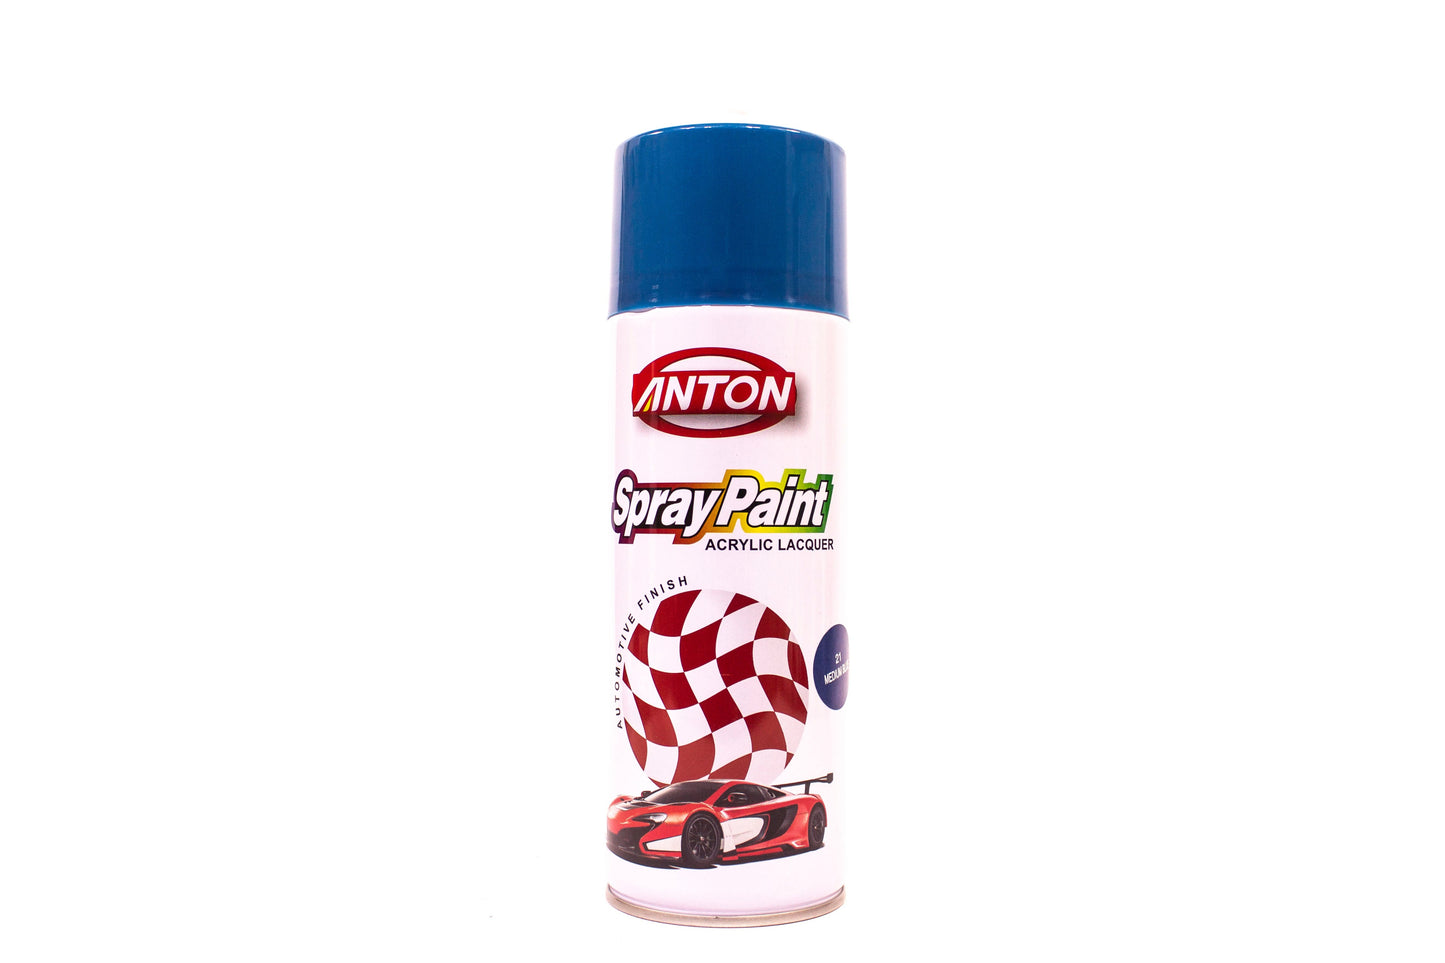 Anton Acrylic Spray Paint